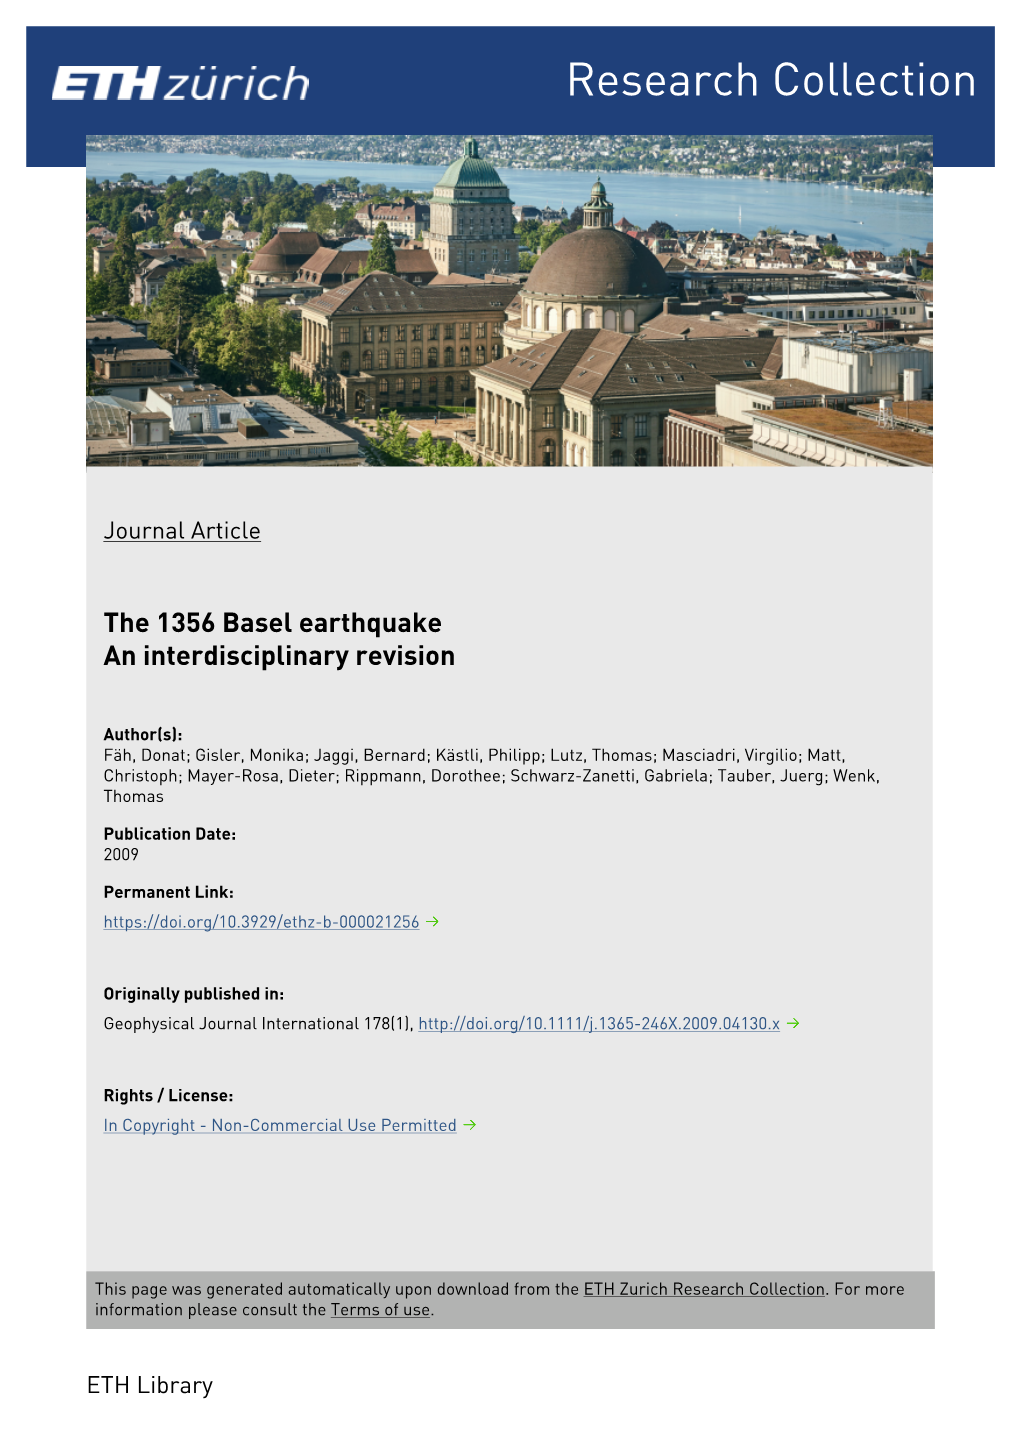 The 1356 Basel Earthquake: an Interdisciplinary Revision